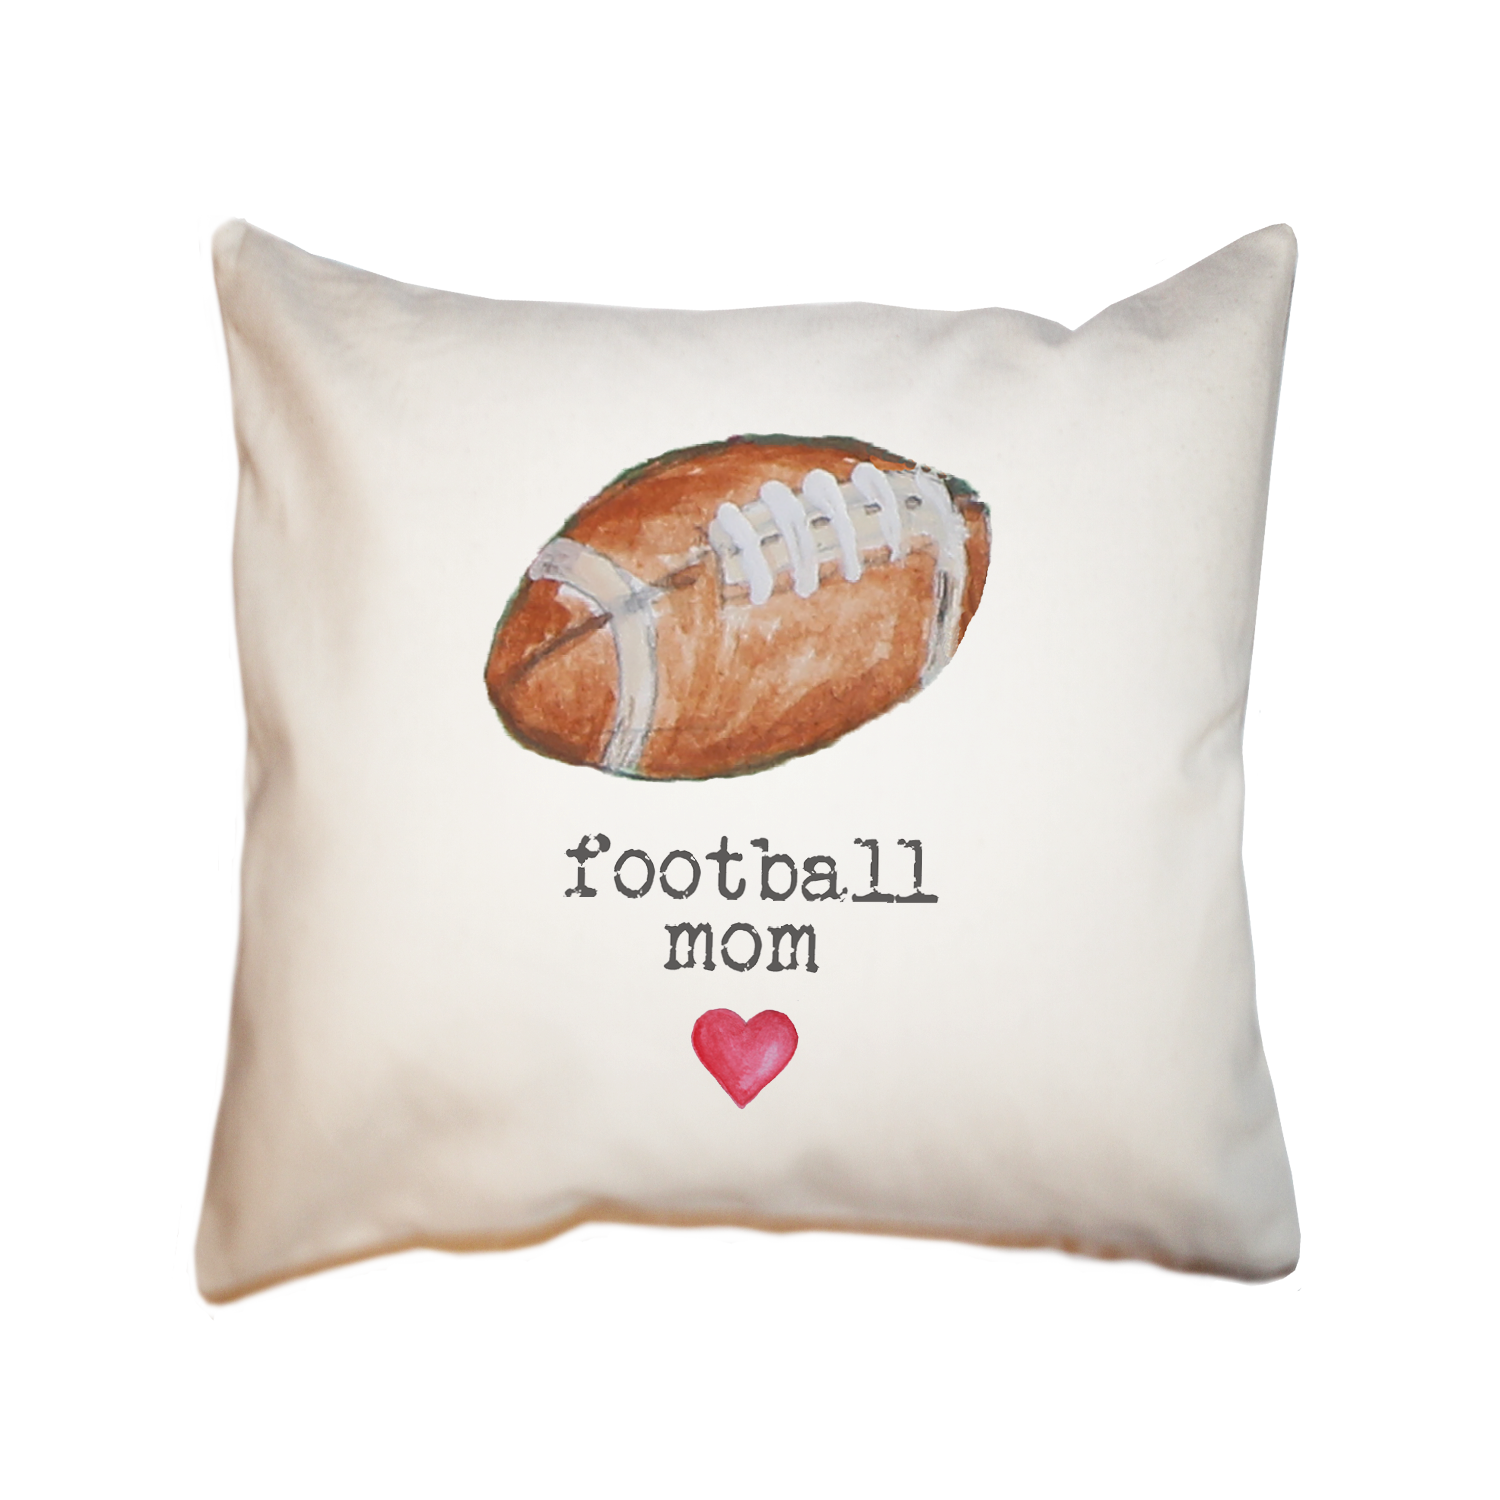 football mom square pillow